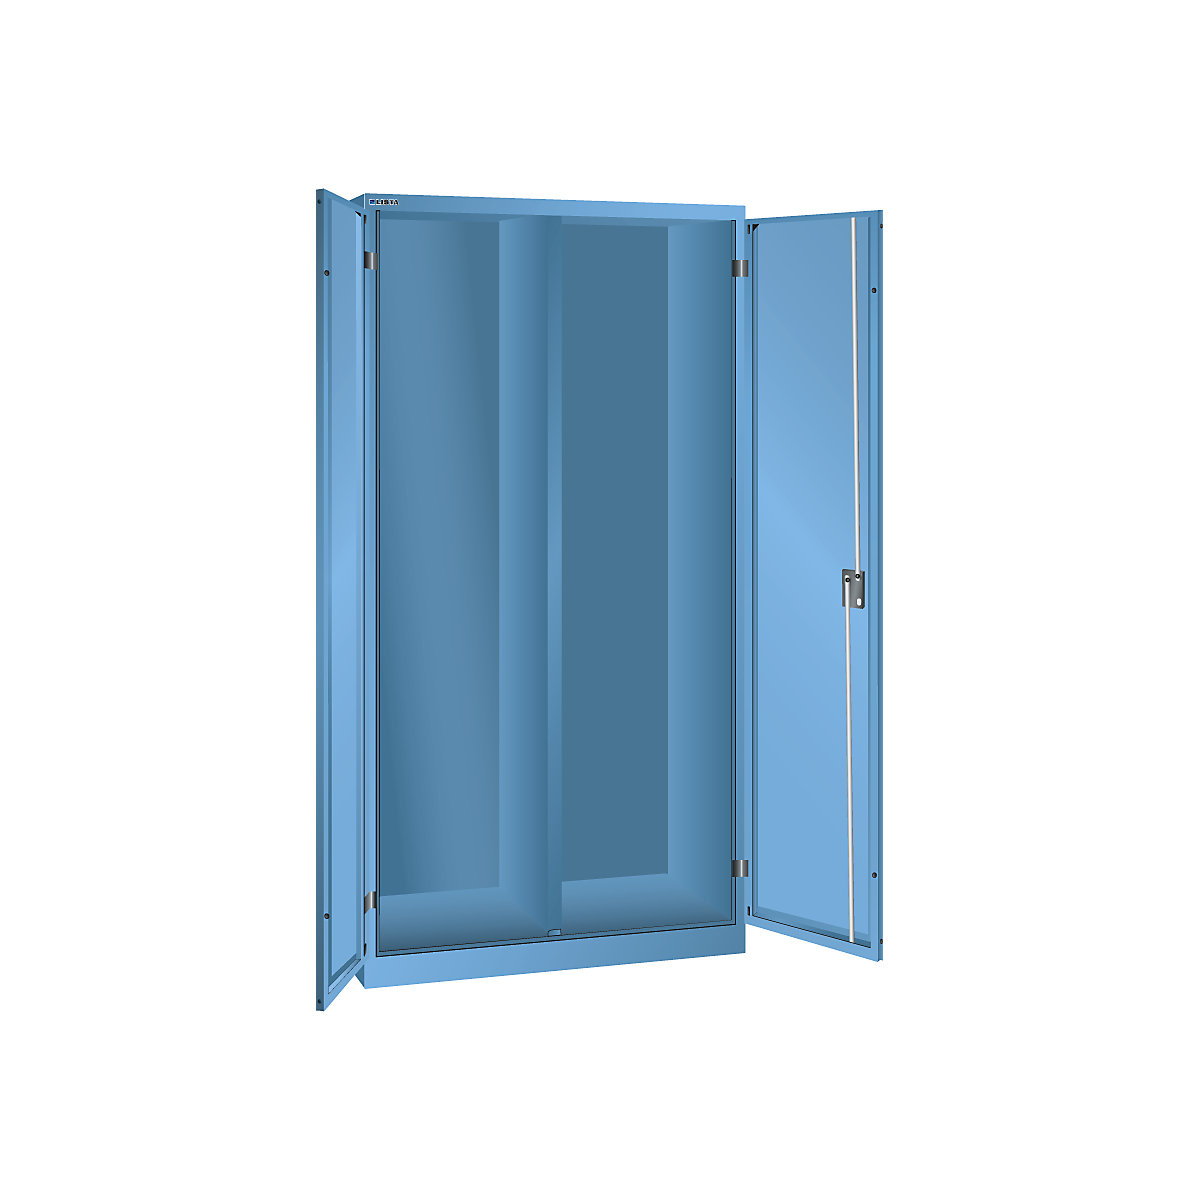 Omara s krilnimi vrati, VxŠxG 1950 x 1000 x 580 mm – LISTA, s predelno steno, svetlo modra-9